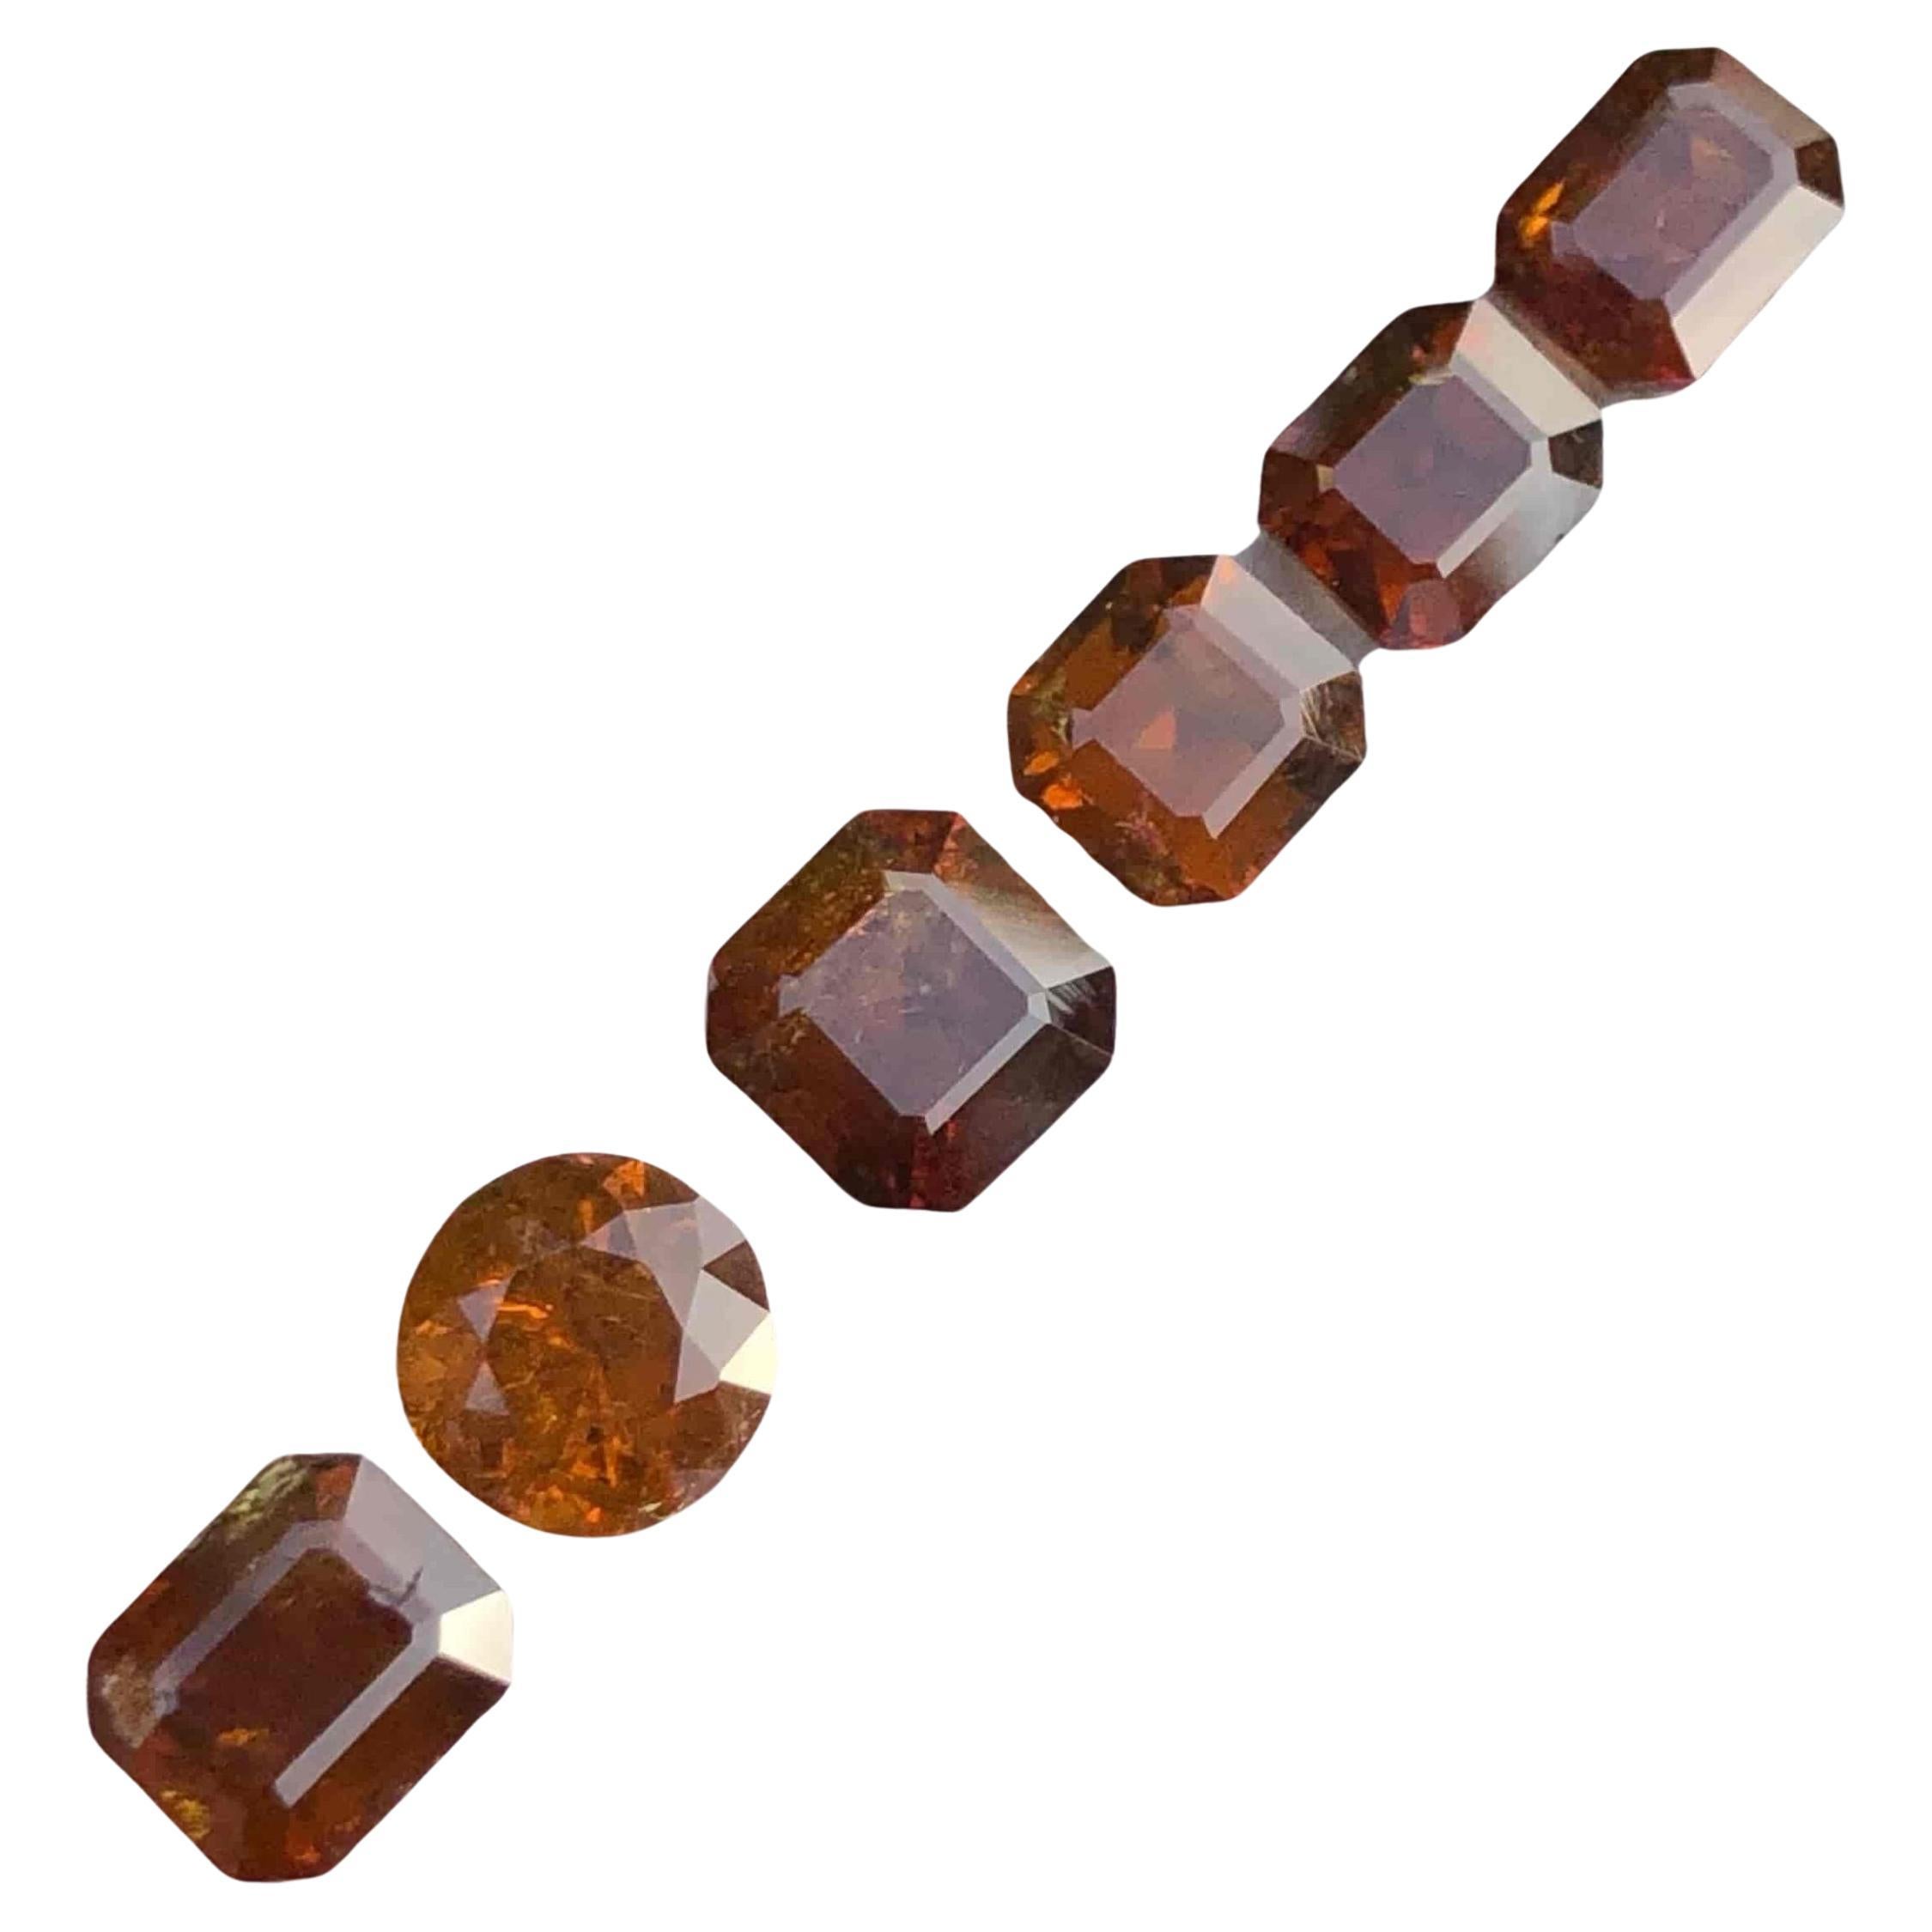 10.15 carats Natural Brown Garnet Stones Lot Loose Gemstones From Mali Africa en vente